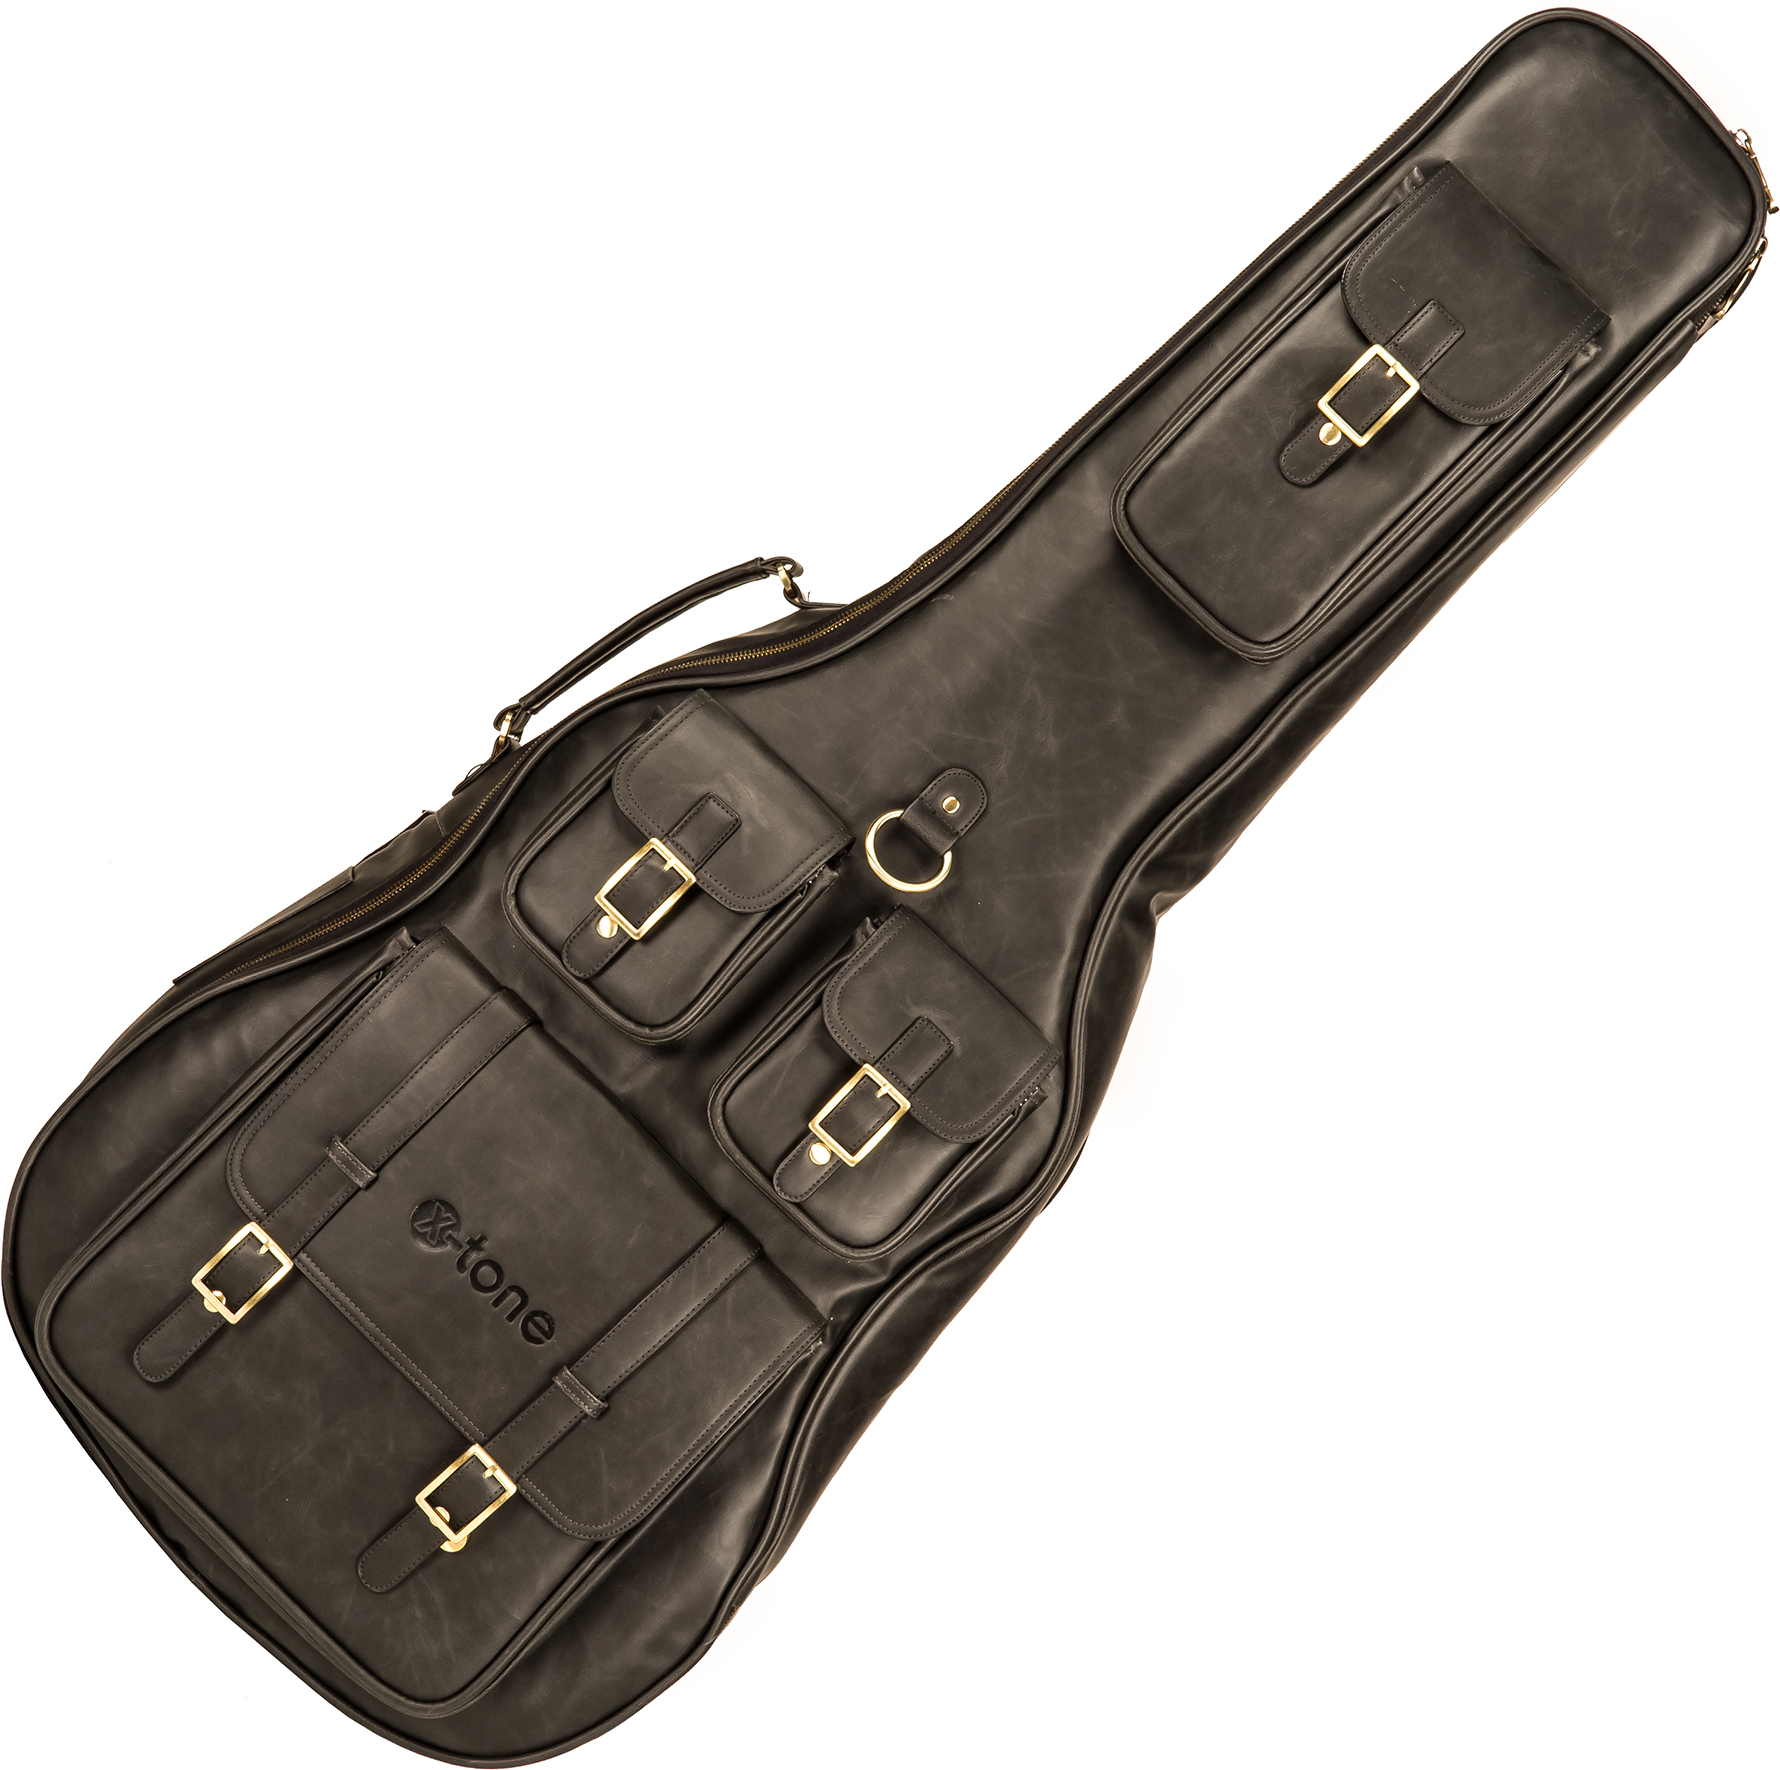 X-tone 2035 Fol-bk Deluxe Leather Acoustic Dreadnought Guitar Bag Cuir Matt Black (ex 2067) - Tas voor Akoestische Westerngitaar - Main picture